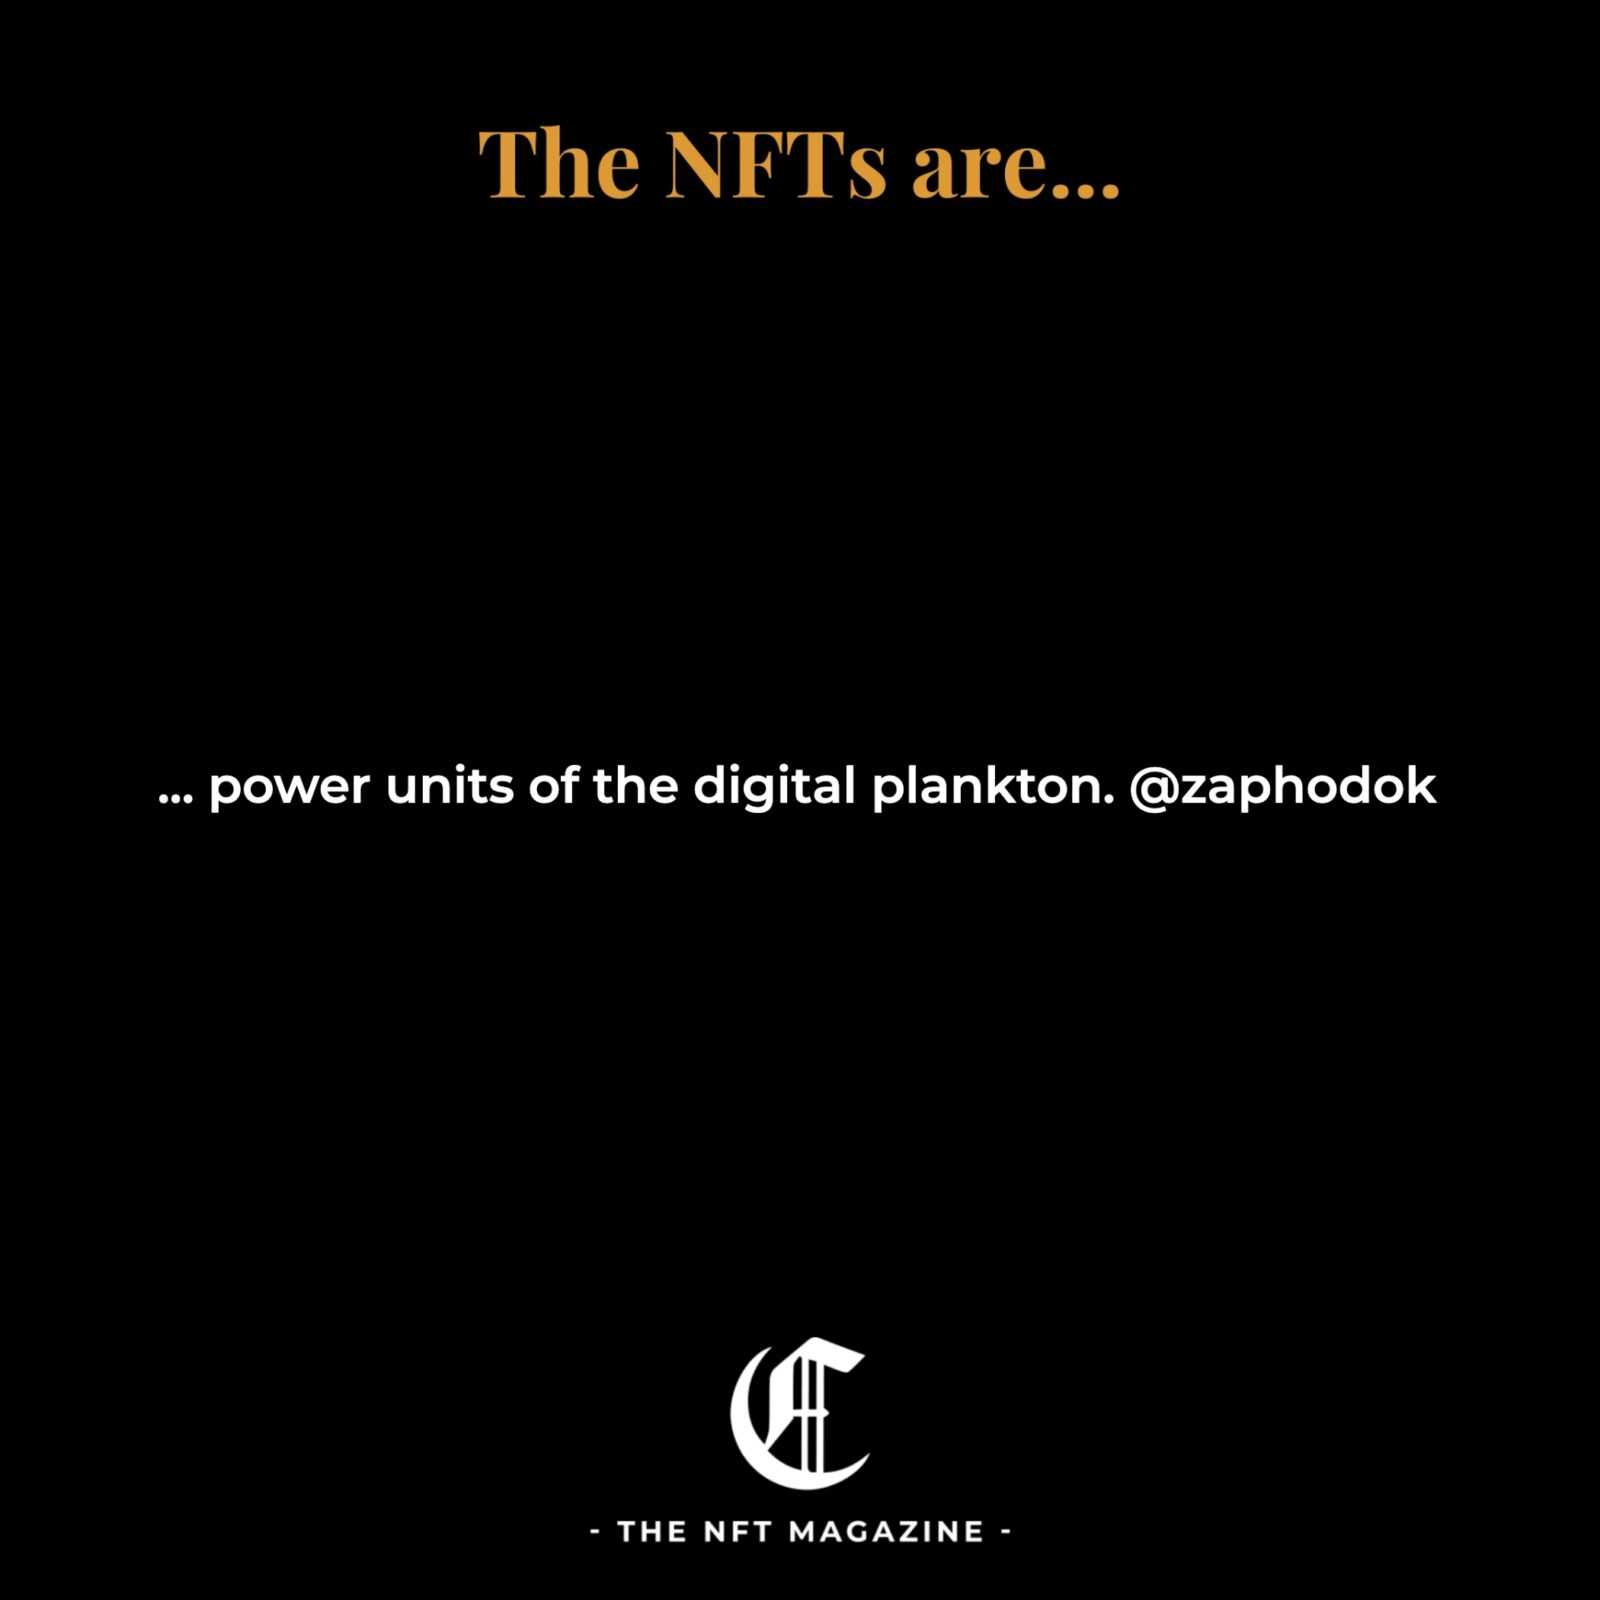 ... power units of the digital plankton. @zaphodok